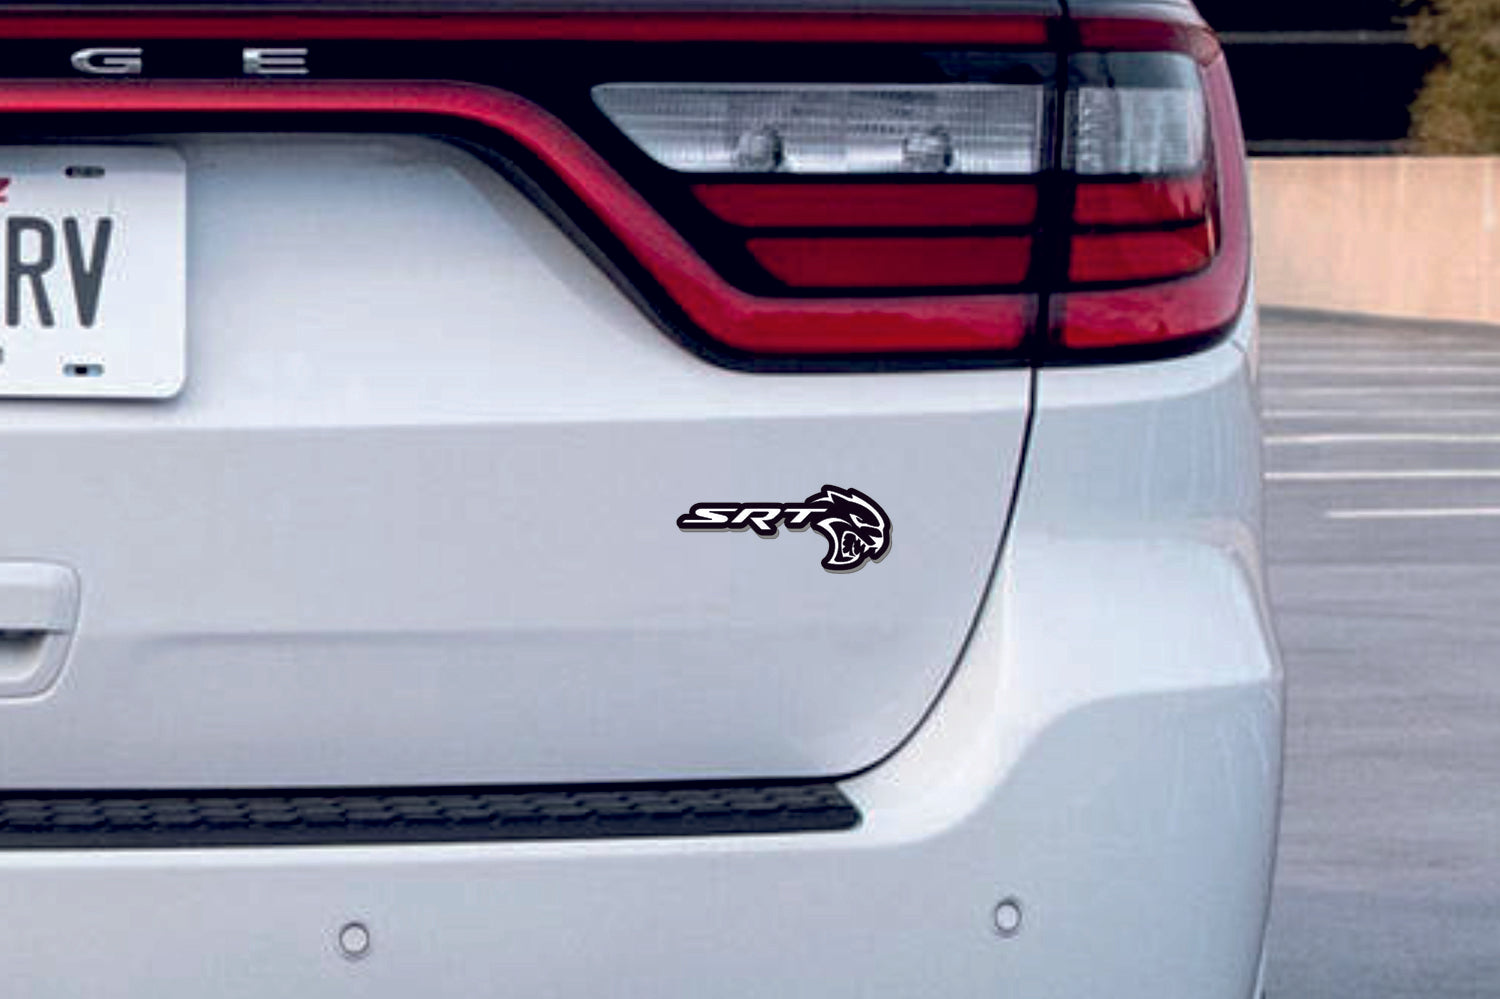 Chrysler tailgate trunk rear emblem with SRT Hellcat logo (Type 2) - decoinfabric